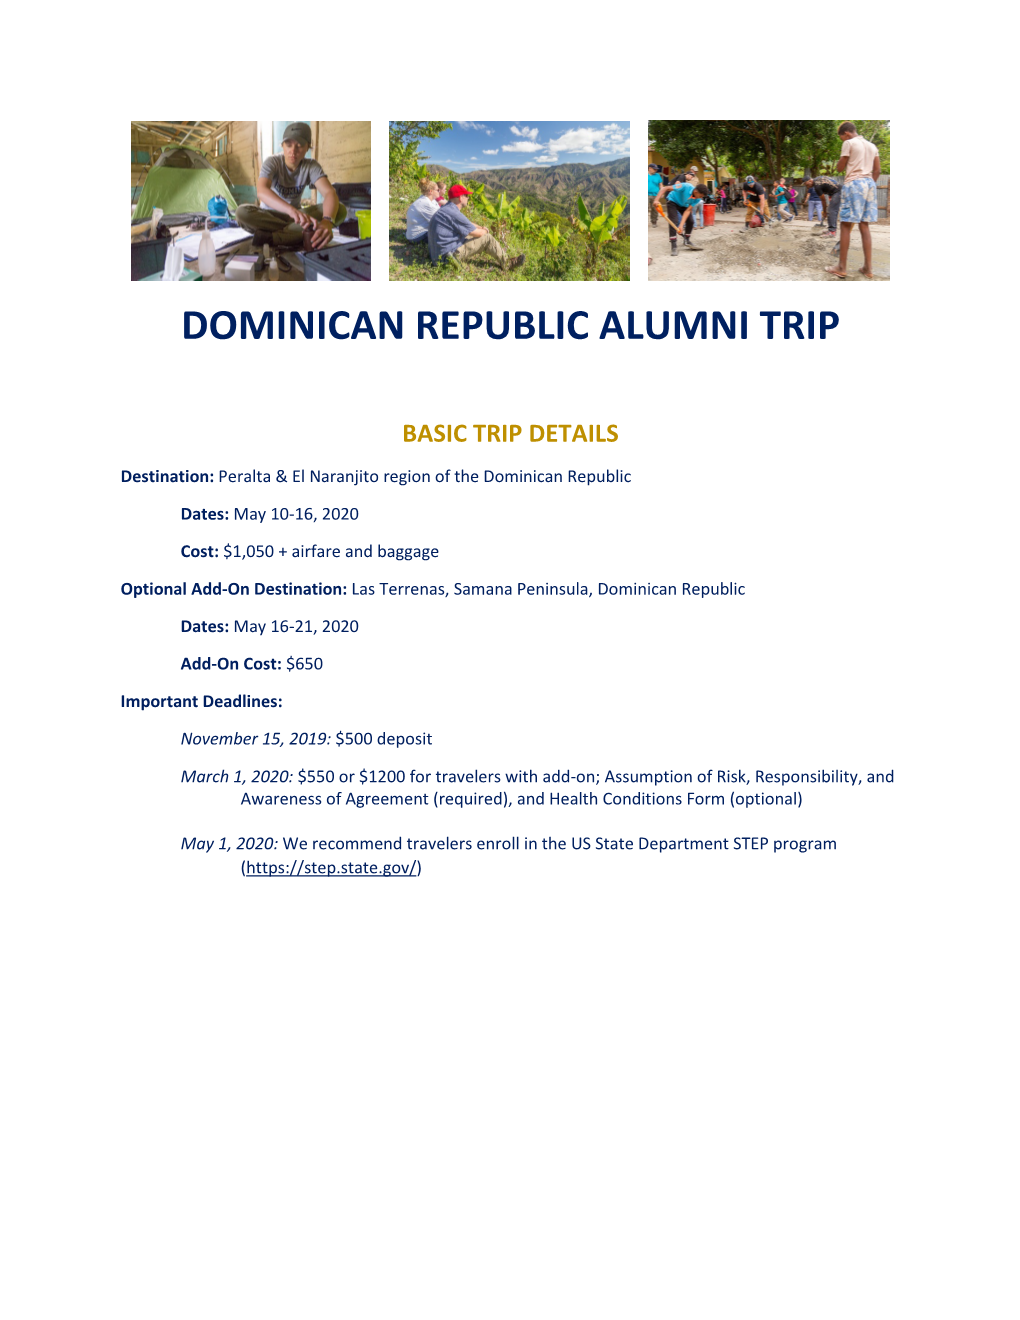 Dominican Republic Alumni Trip